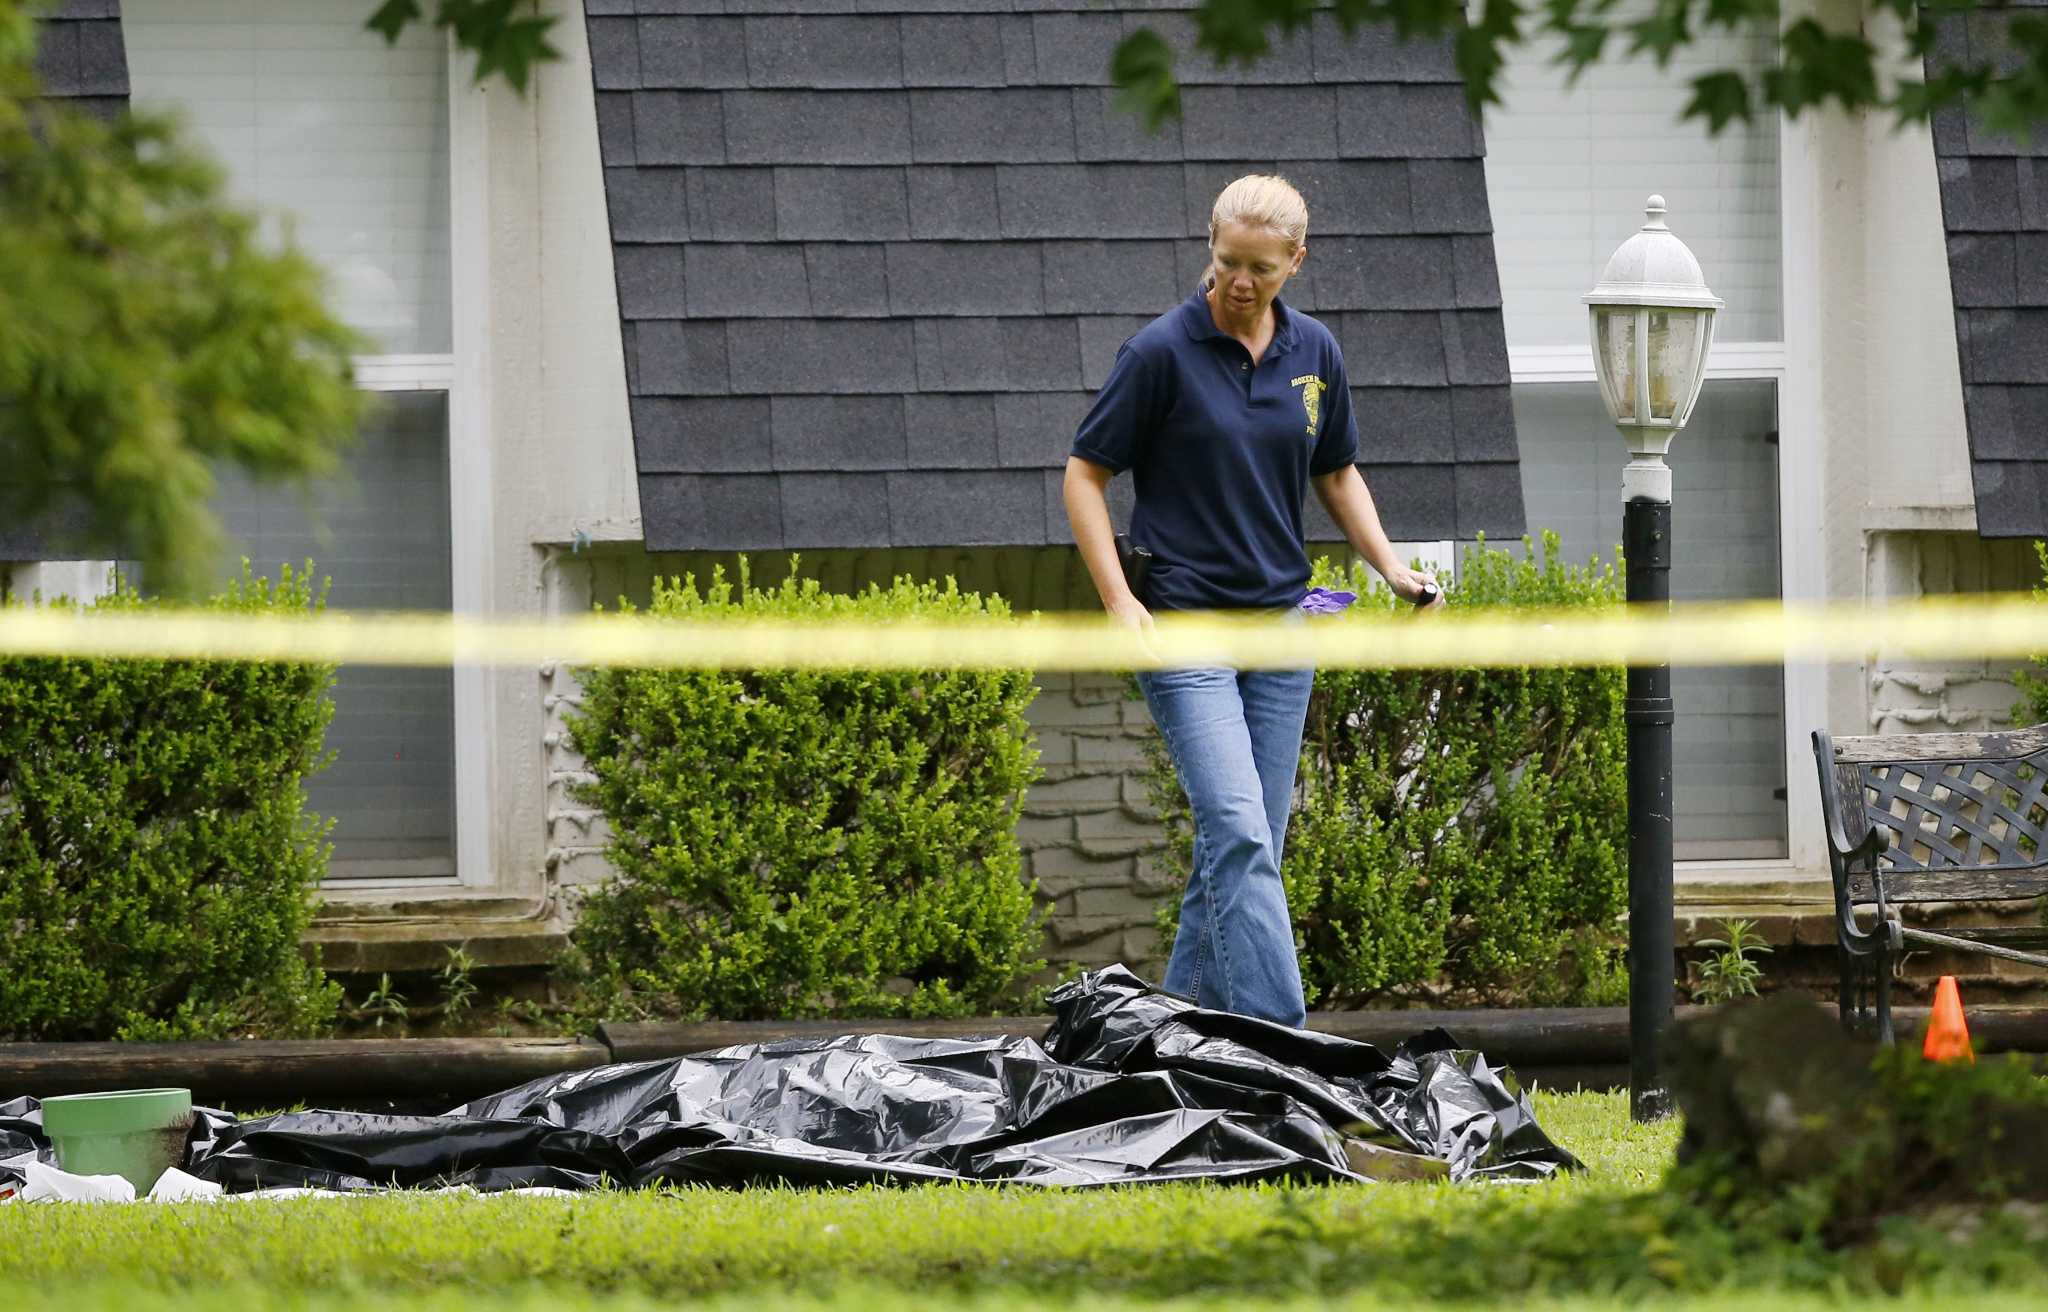 middelen Petulance Tarief Police in Oklahoma say motive unclear in 5 fatal stabbings